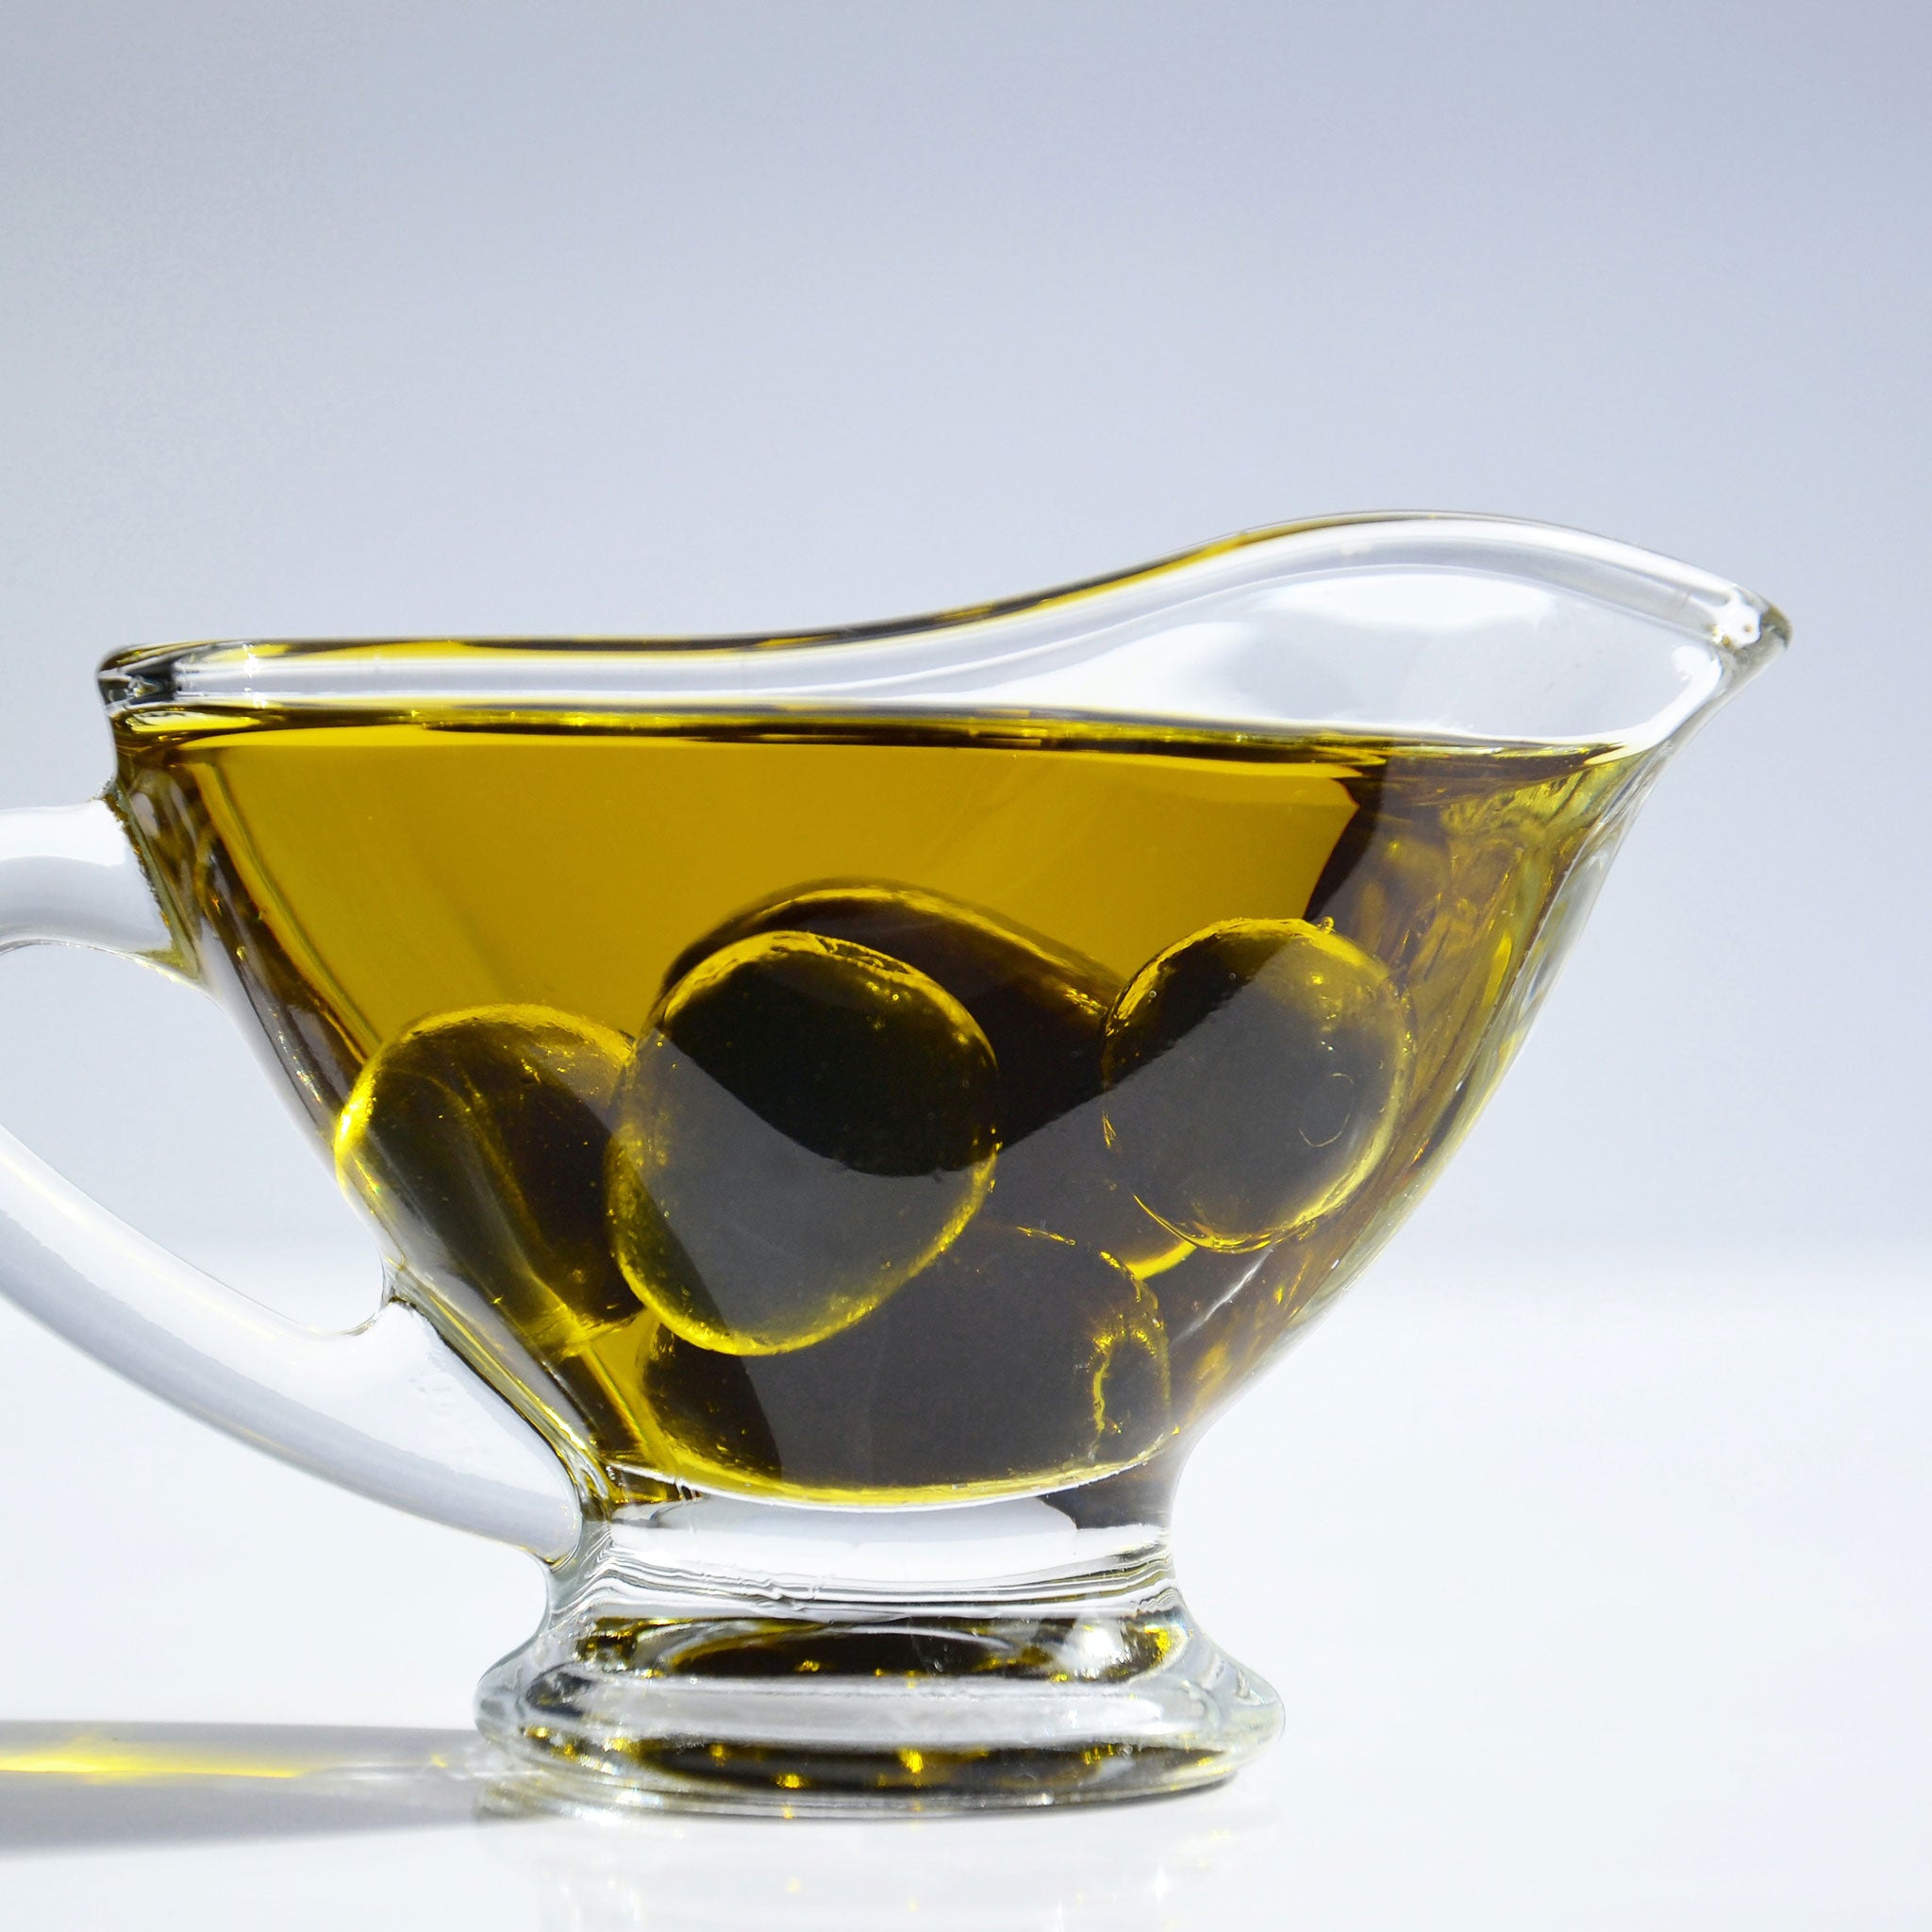 Koroneiki Extra Virgin Olive Oil from Greece